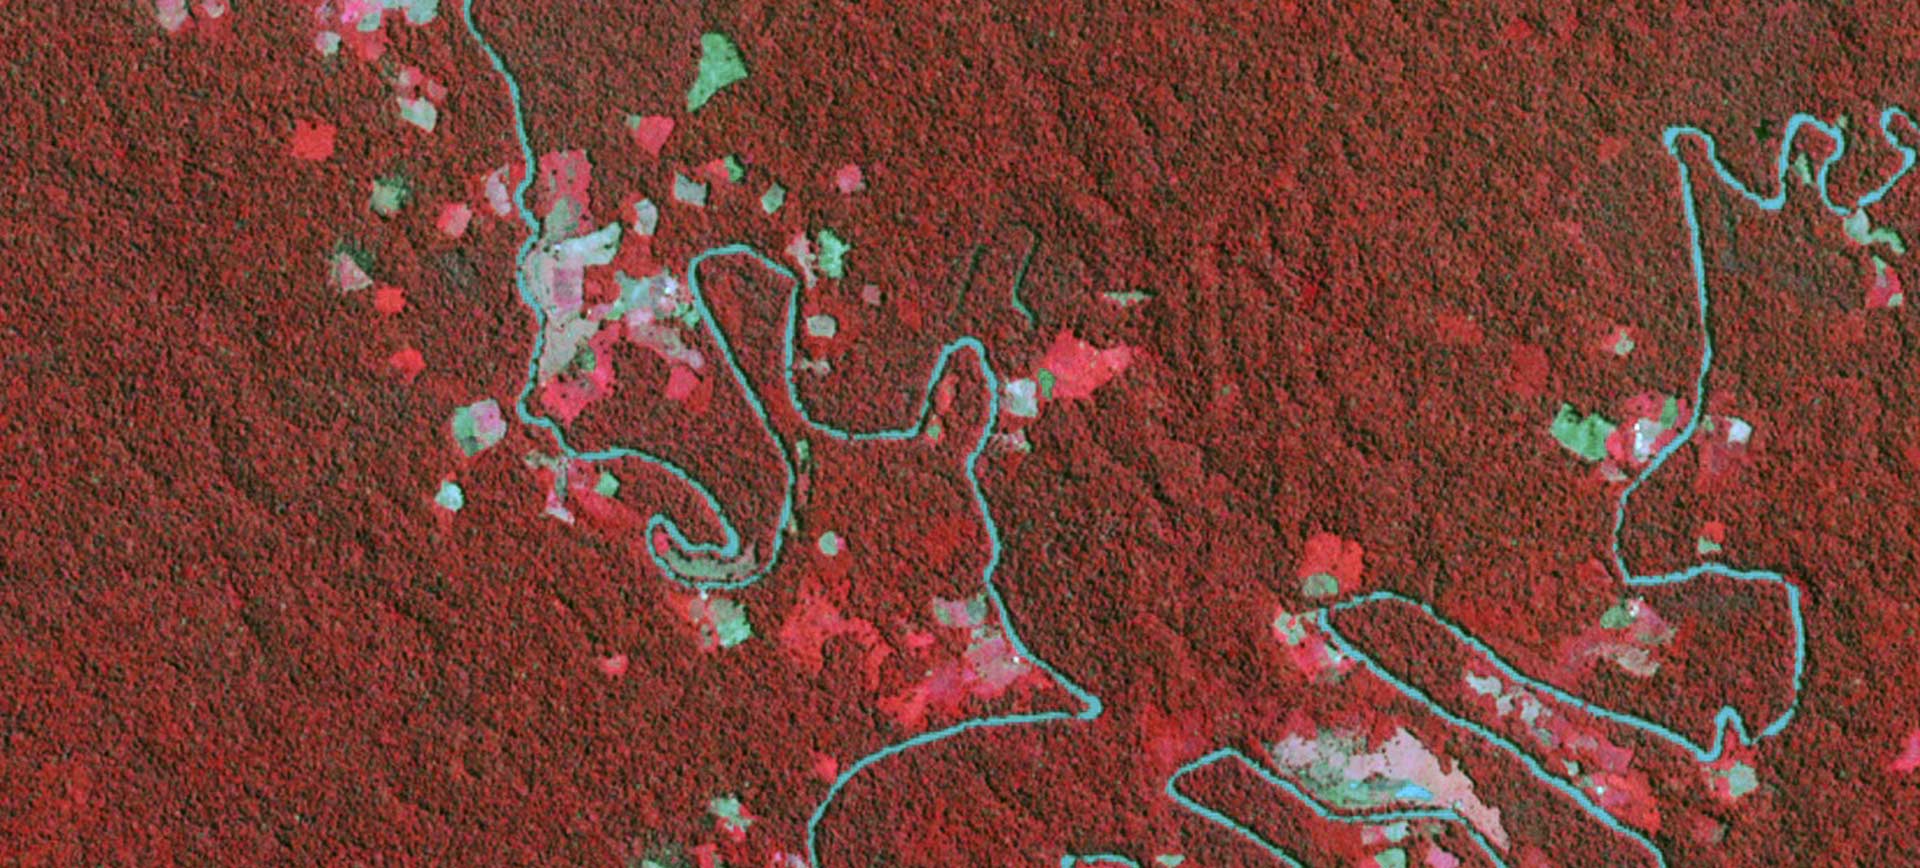 SAtellite Image SPOT 6 - Colombia